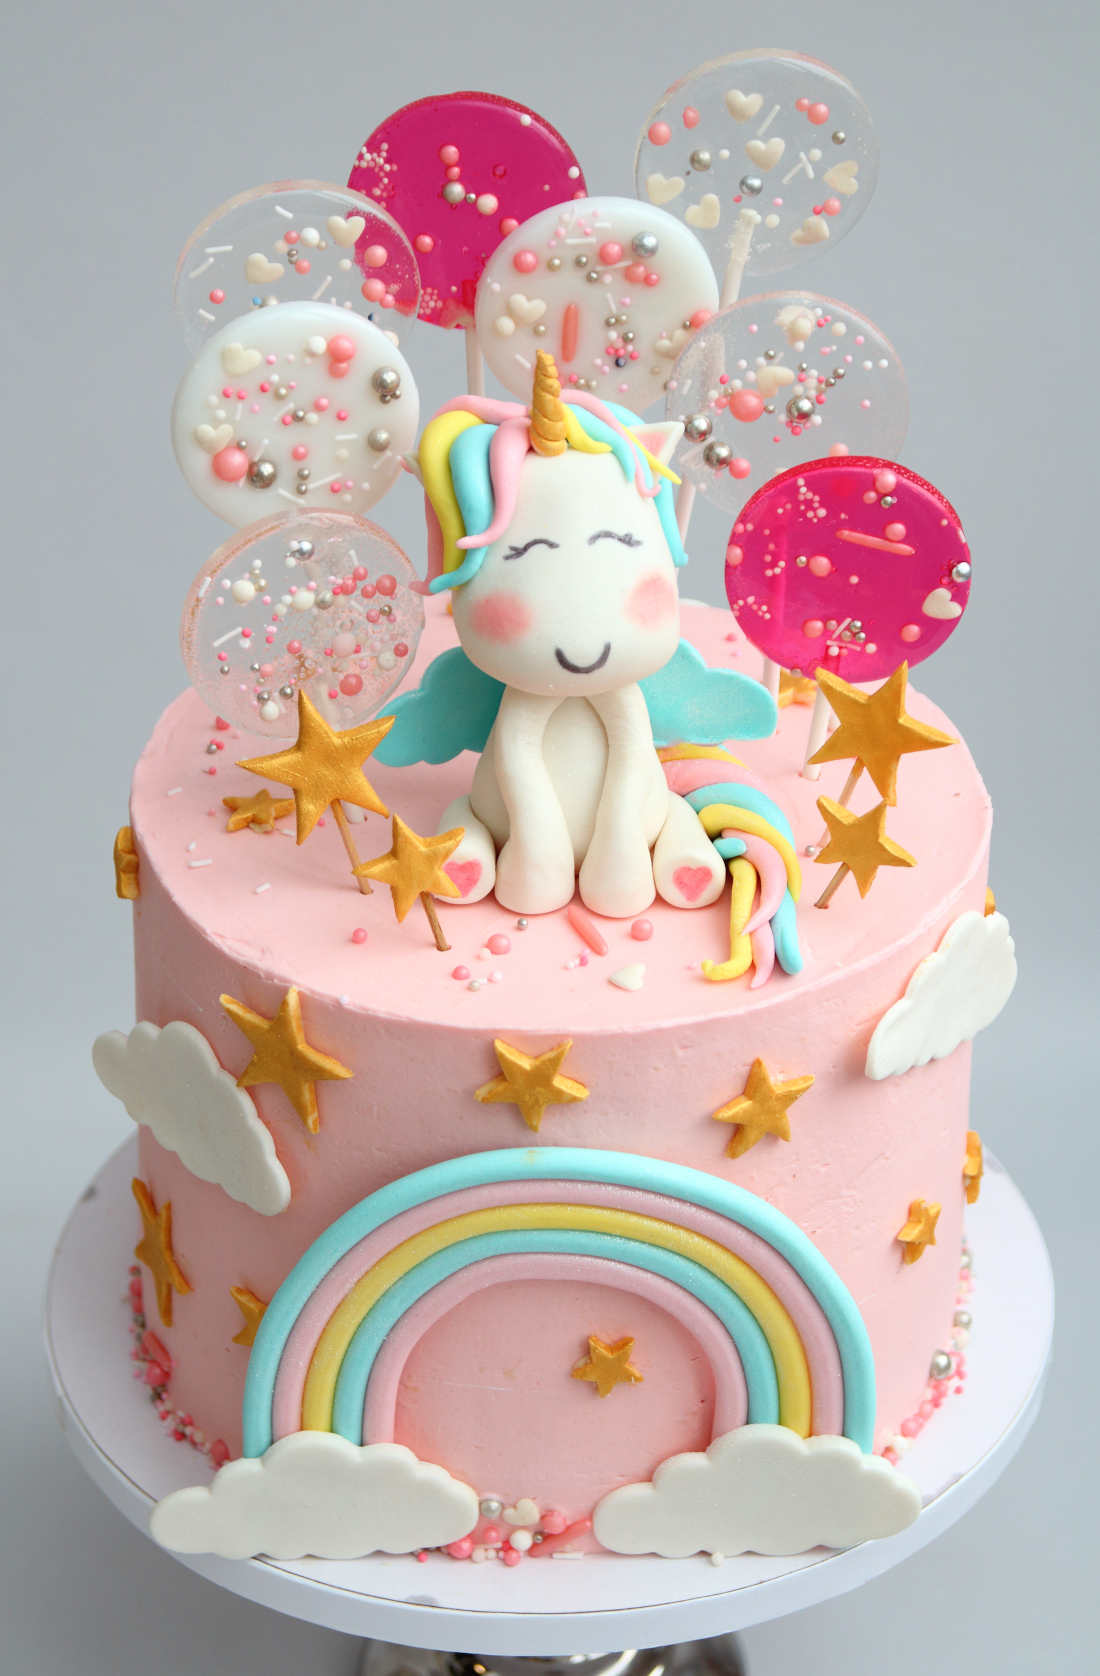 Unicorn cake for a girl's birthday